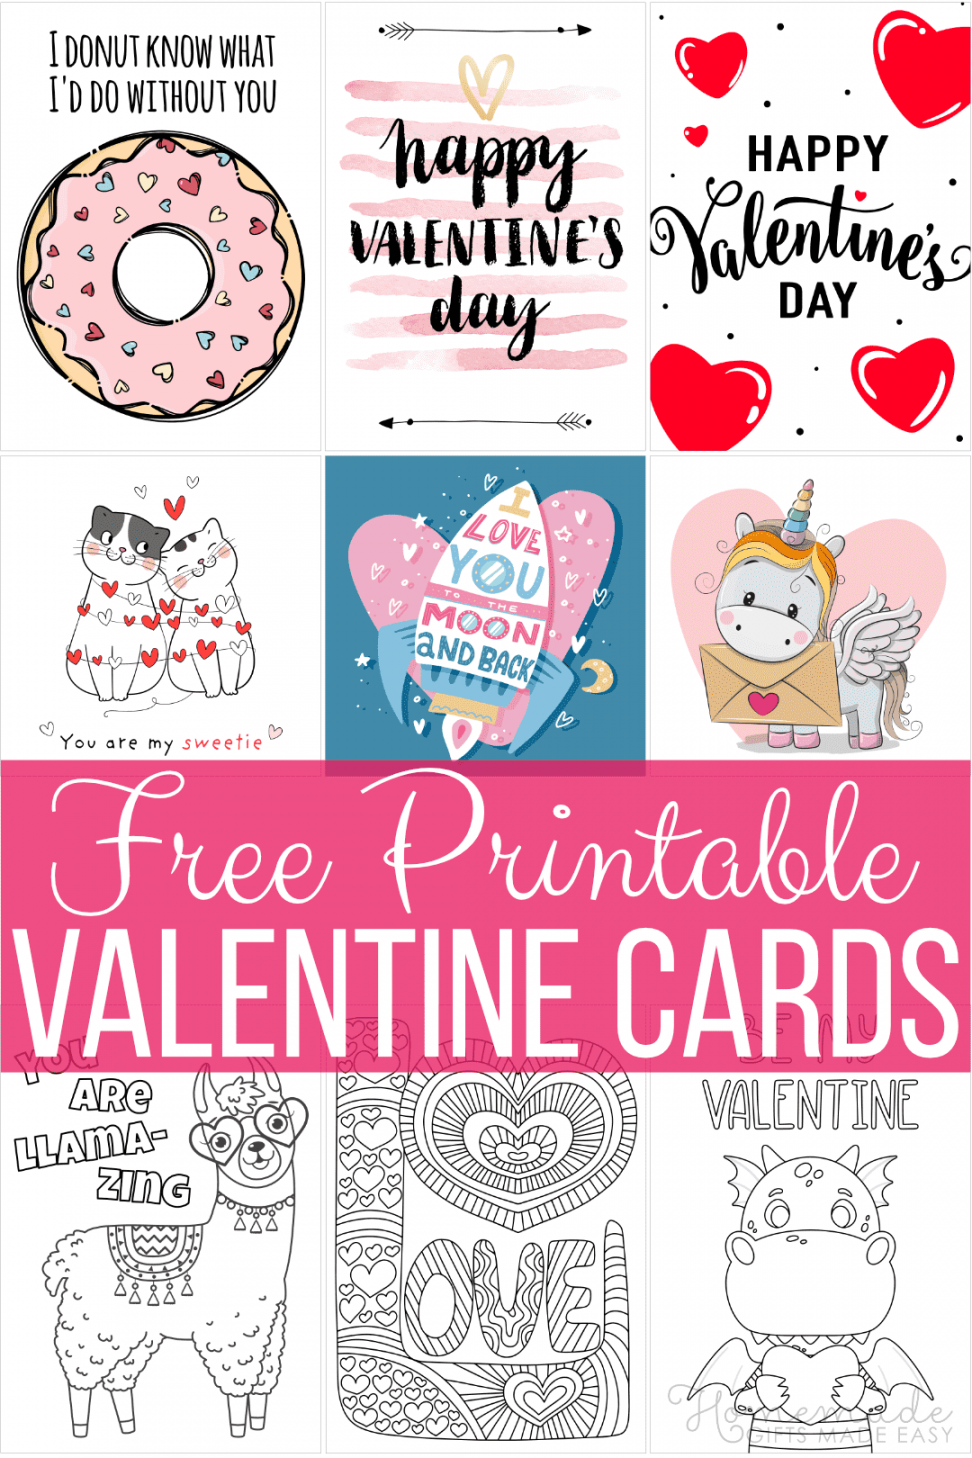 Printable Valentines Cards Free - Printable -  Free Printable Valentine Cards for